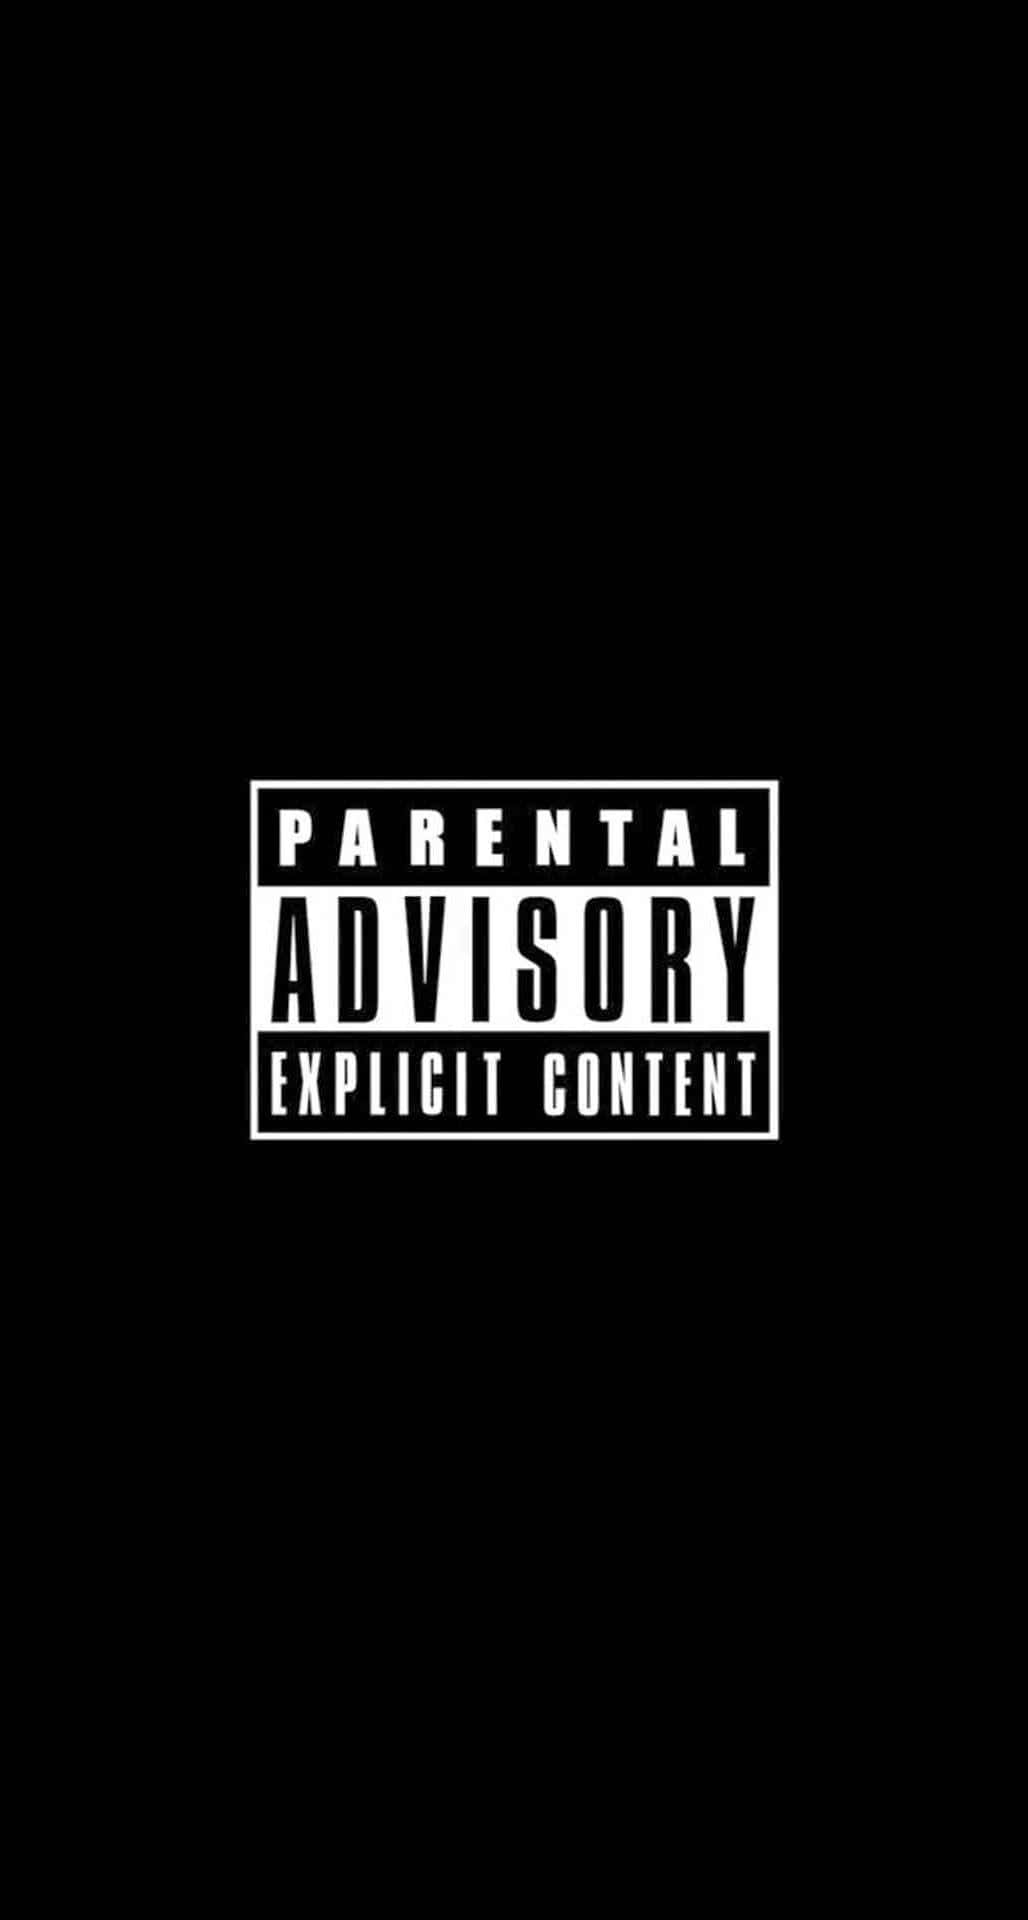 The Logo For Parental Advisory Explicit Content Wallpaper